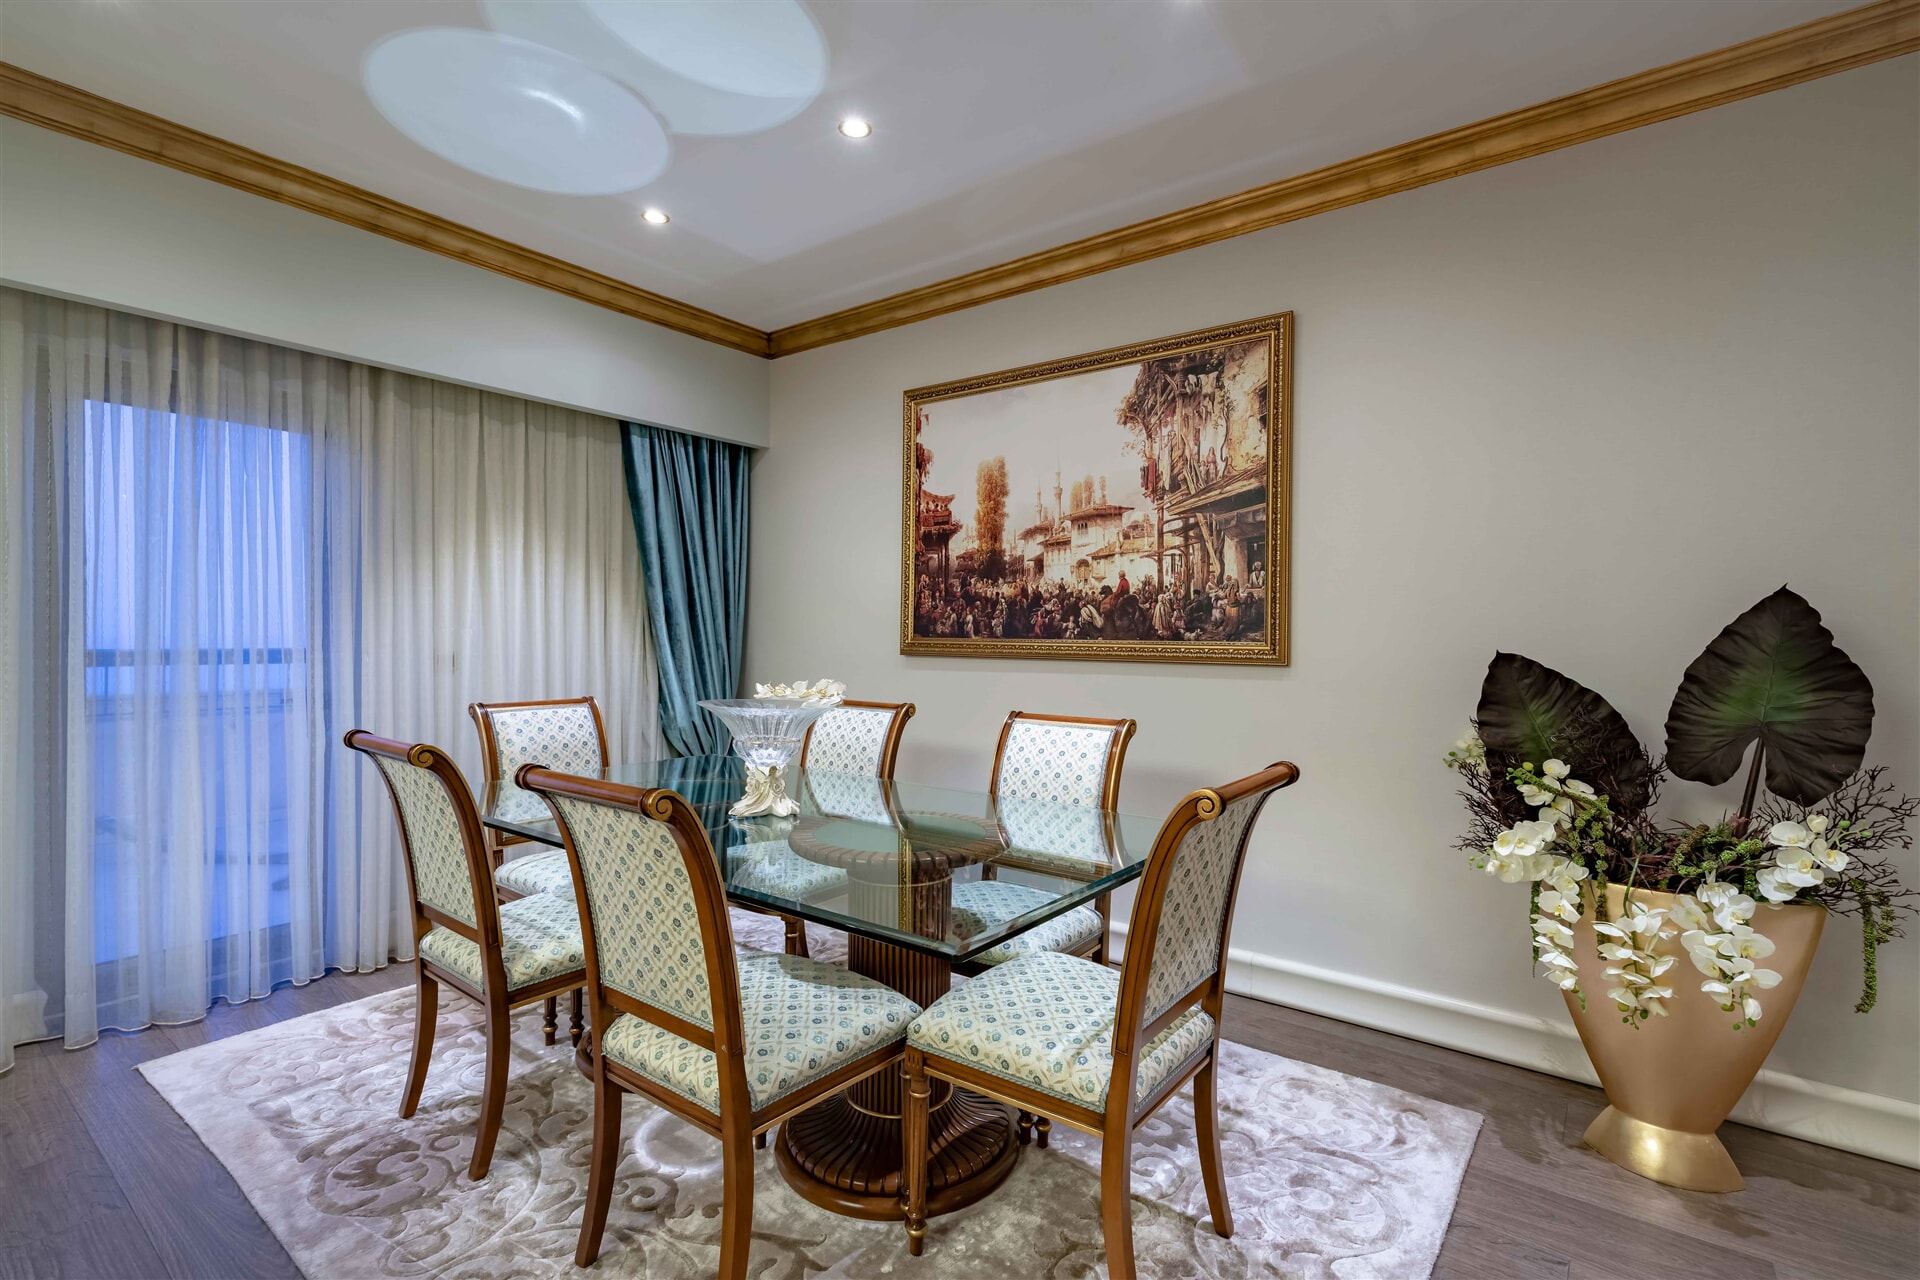 EUPHORIA AEGEAN RESORT AND THERMAL HOTEL – King Suite